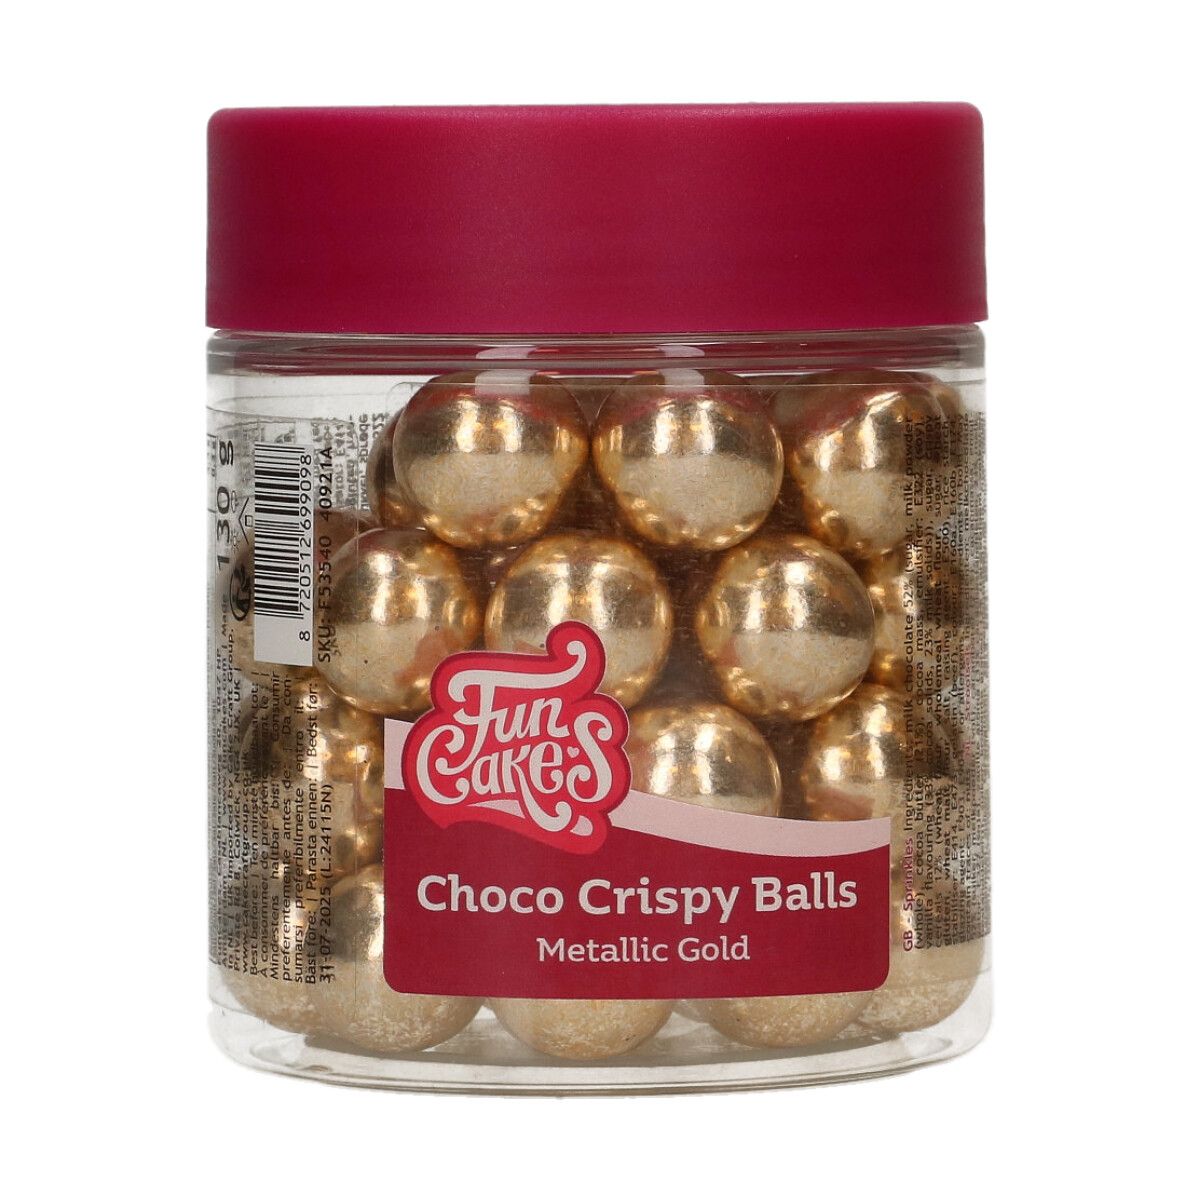 FunCakes Choco Crispy Balls - Metallic Gold 130g